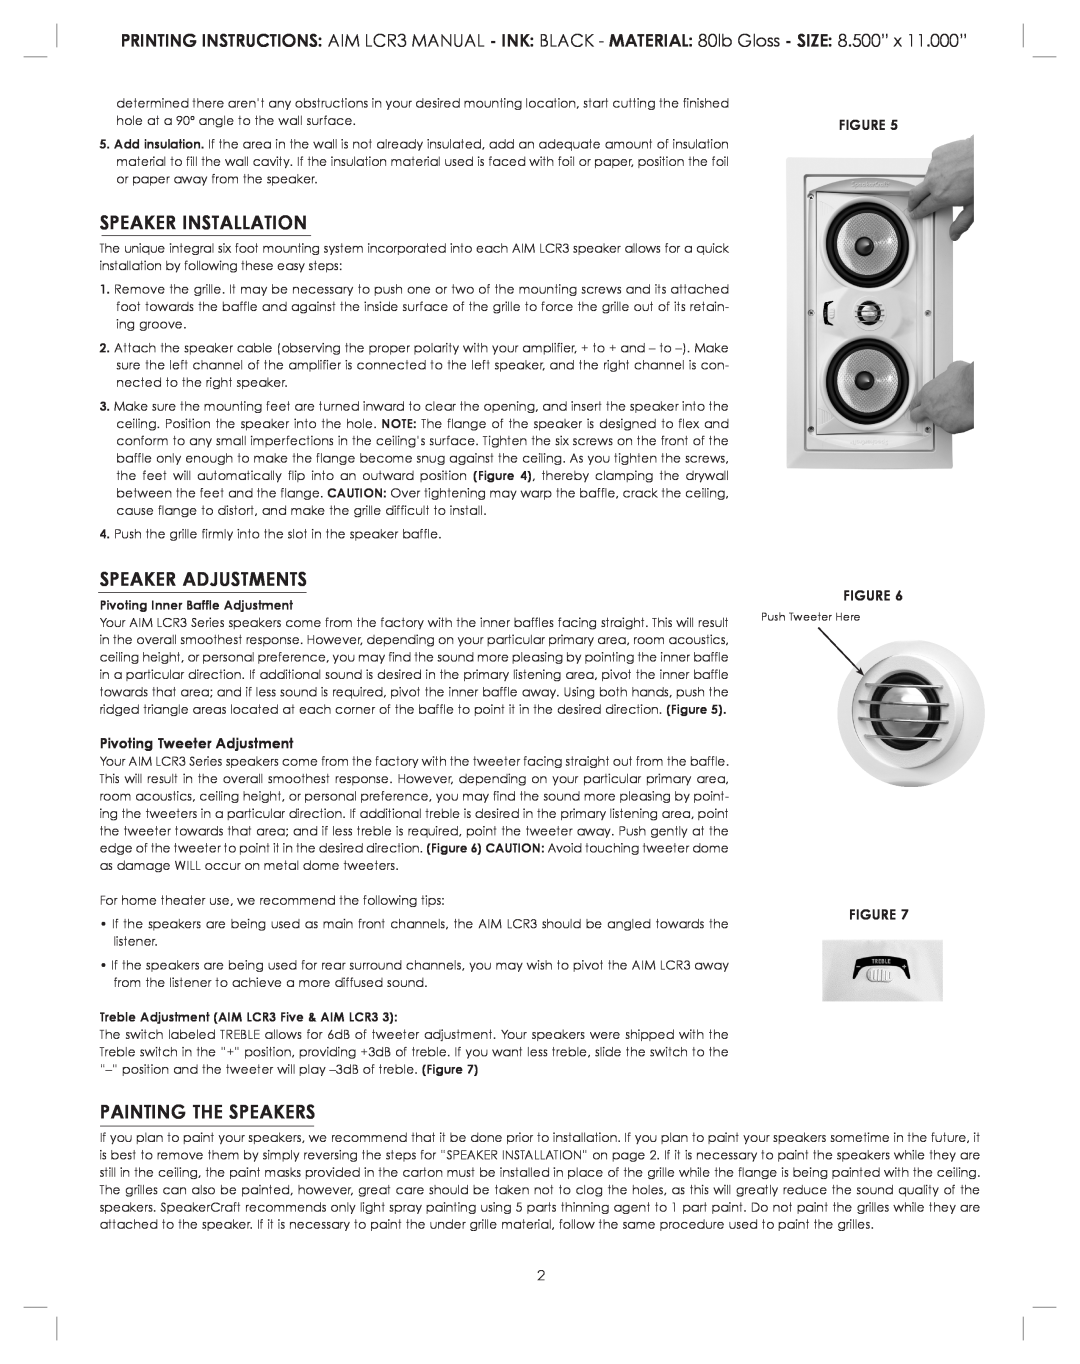 SpeakerCraft AIM LCR3 Speaker Installation, Speaker Adjustments, Painting The Speakers, Pivoting Tweeter Adjustment 